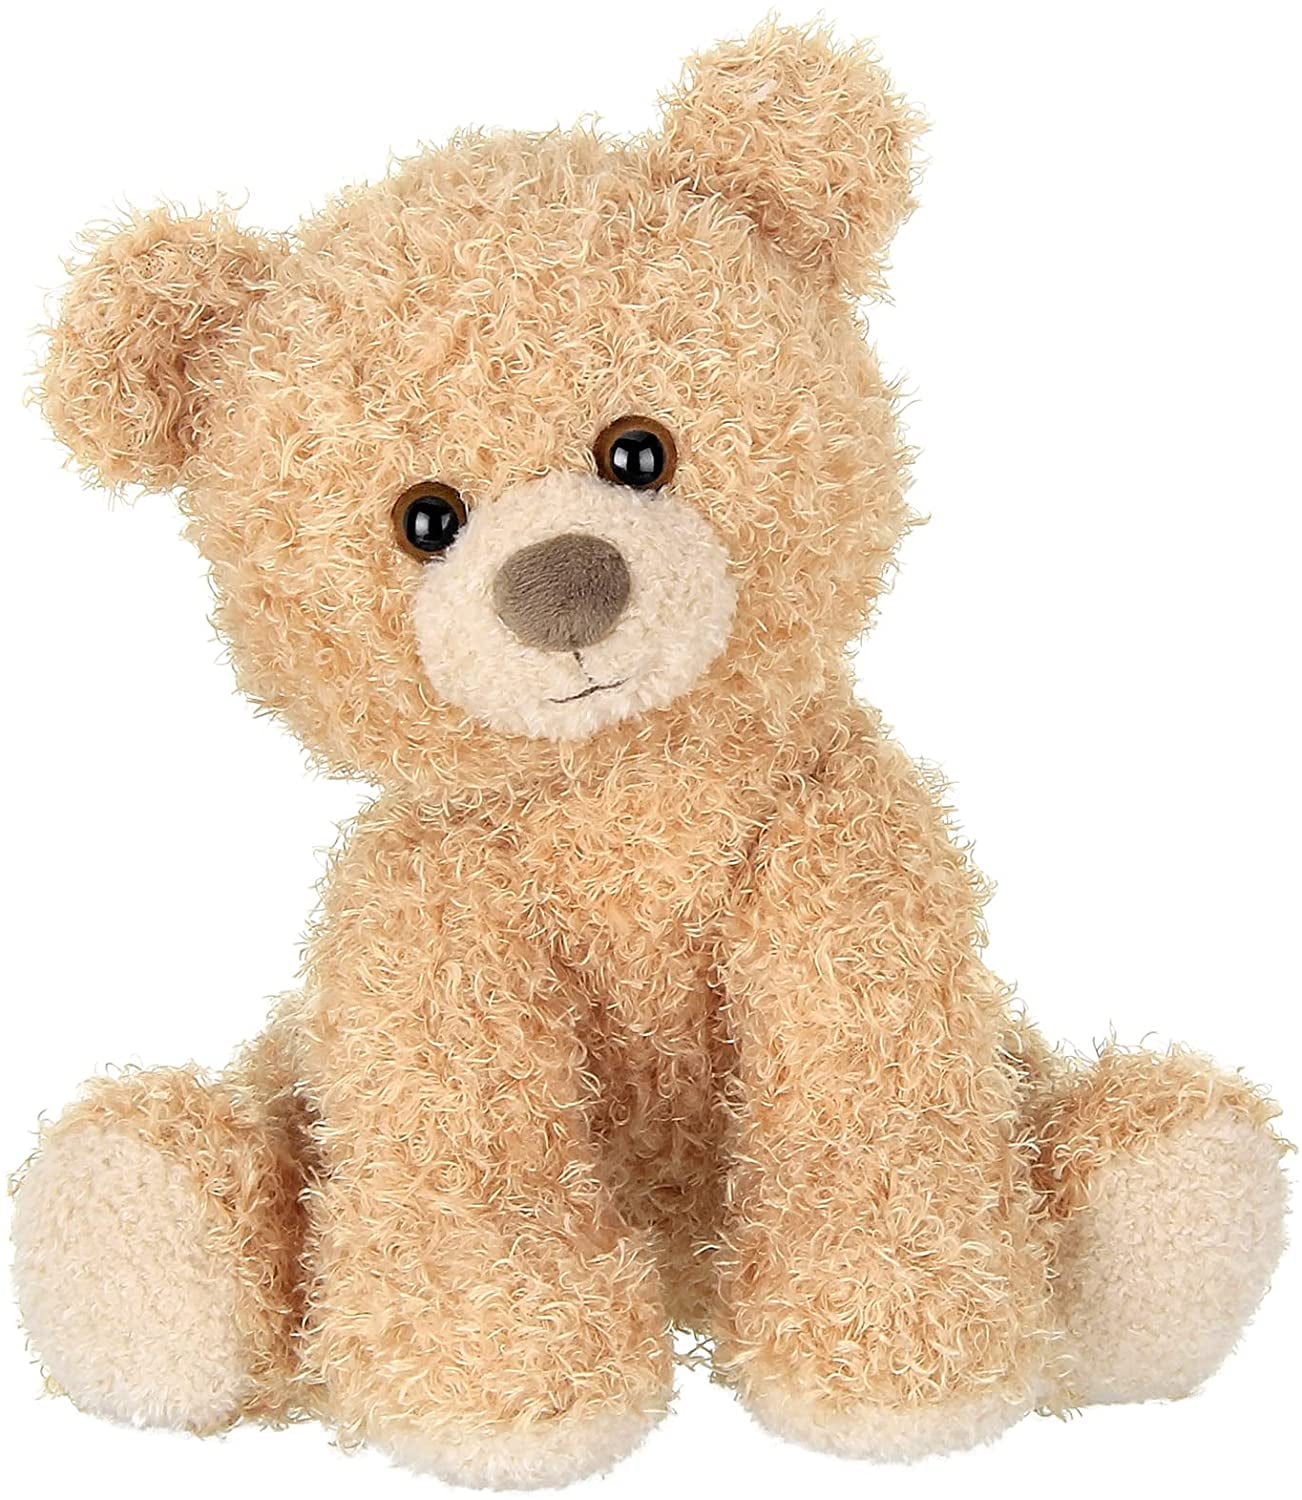 Cute Cuddly Gift Present Award Teddy Bear GREATEST WINDOW CLEANER EVER NEW 